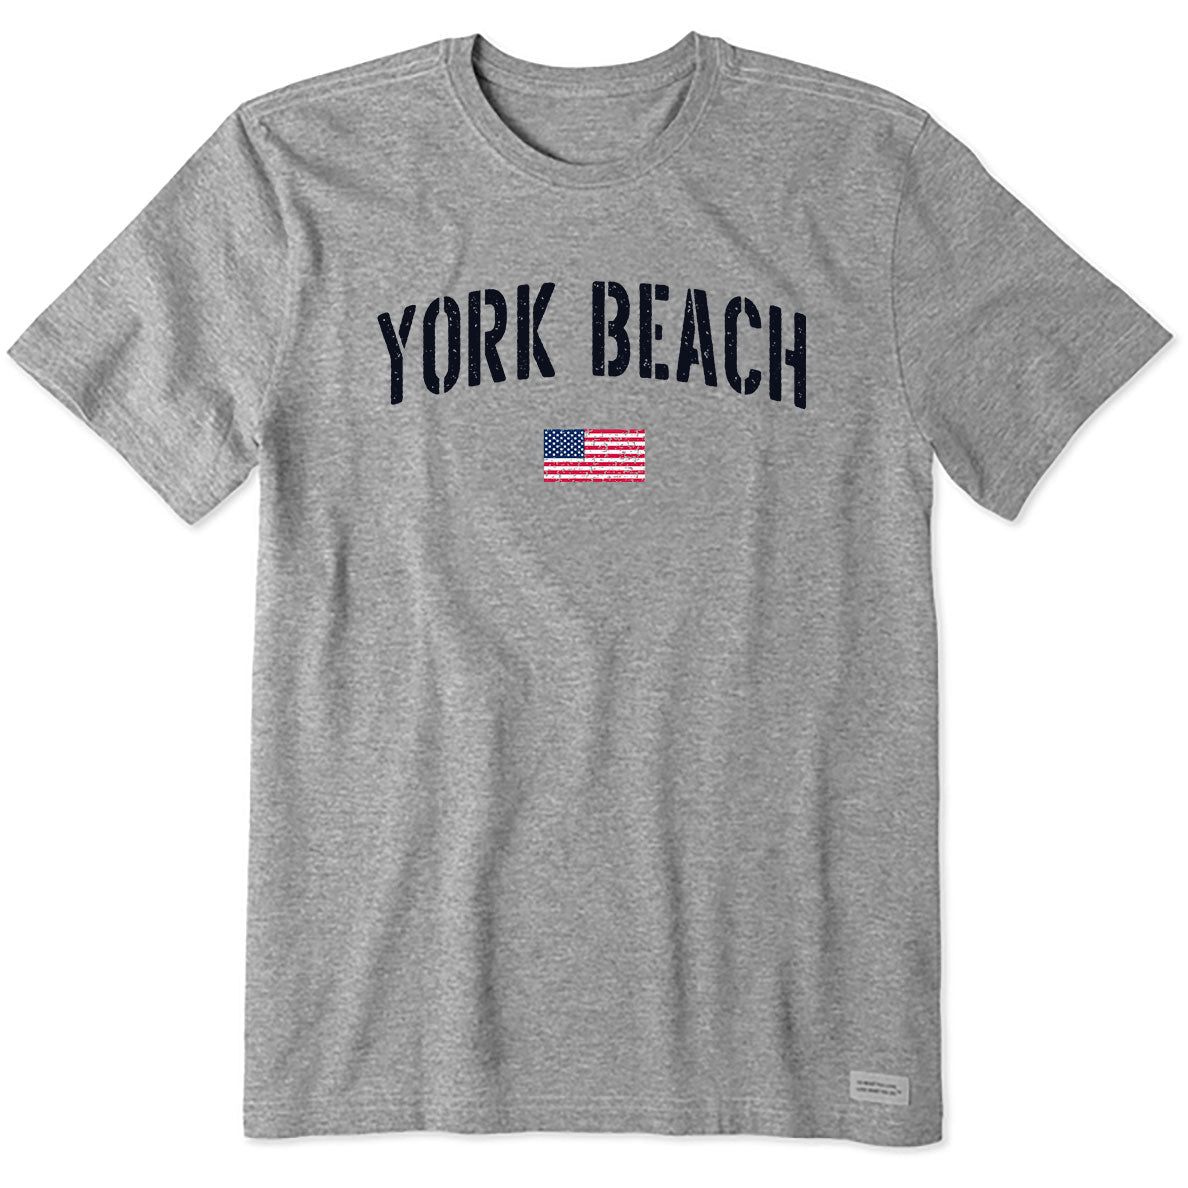 York Beach T-Shirt - York Maine-207 Threads